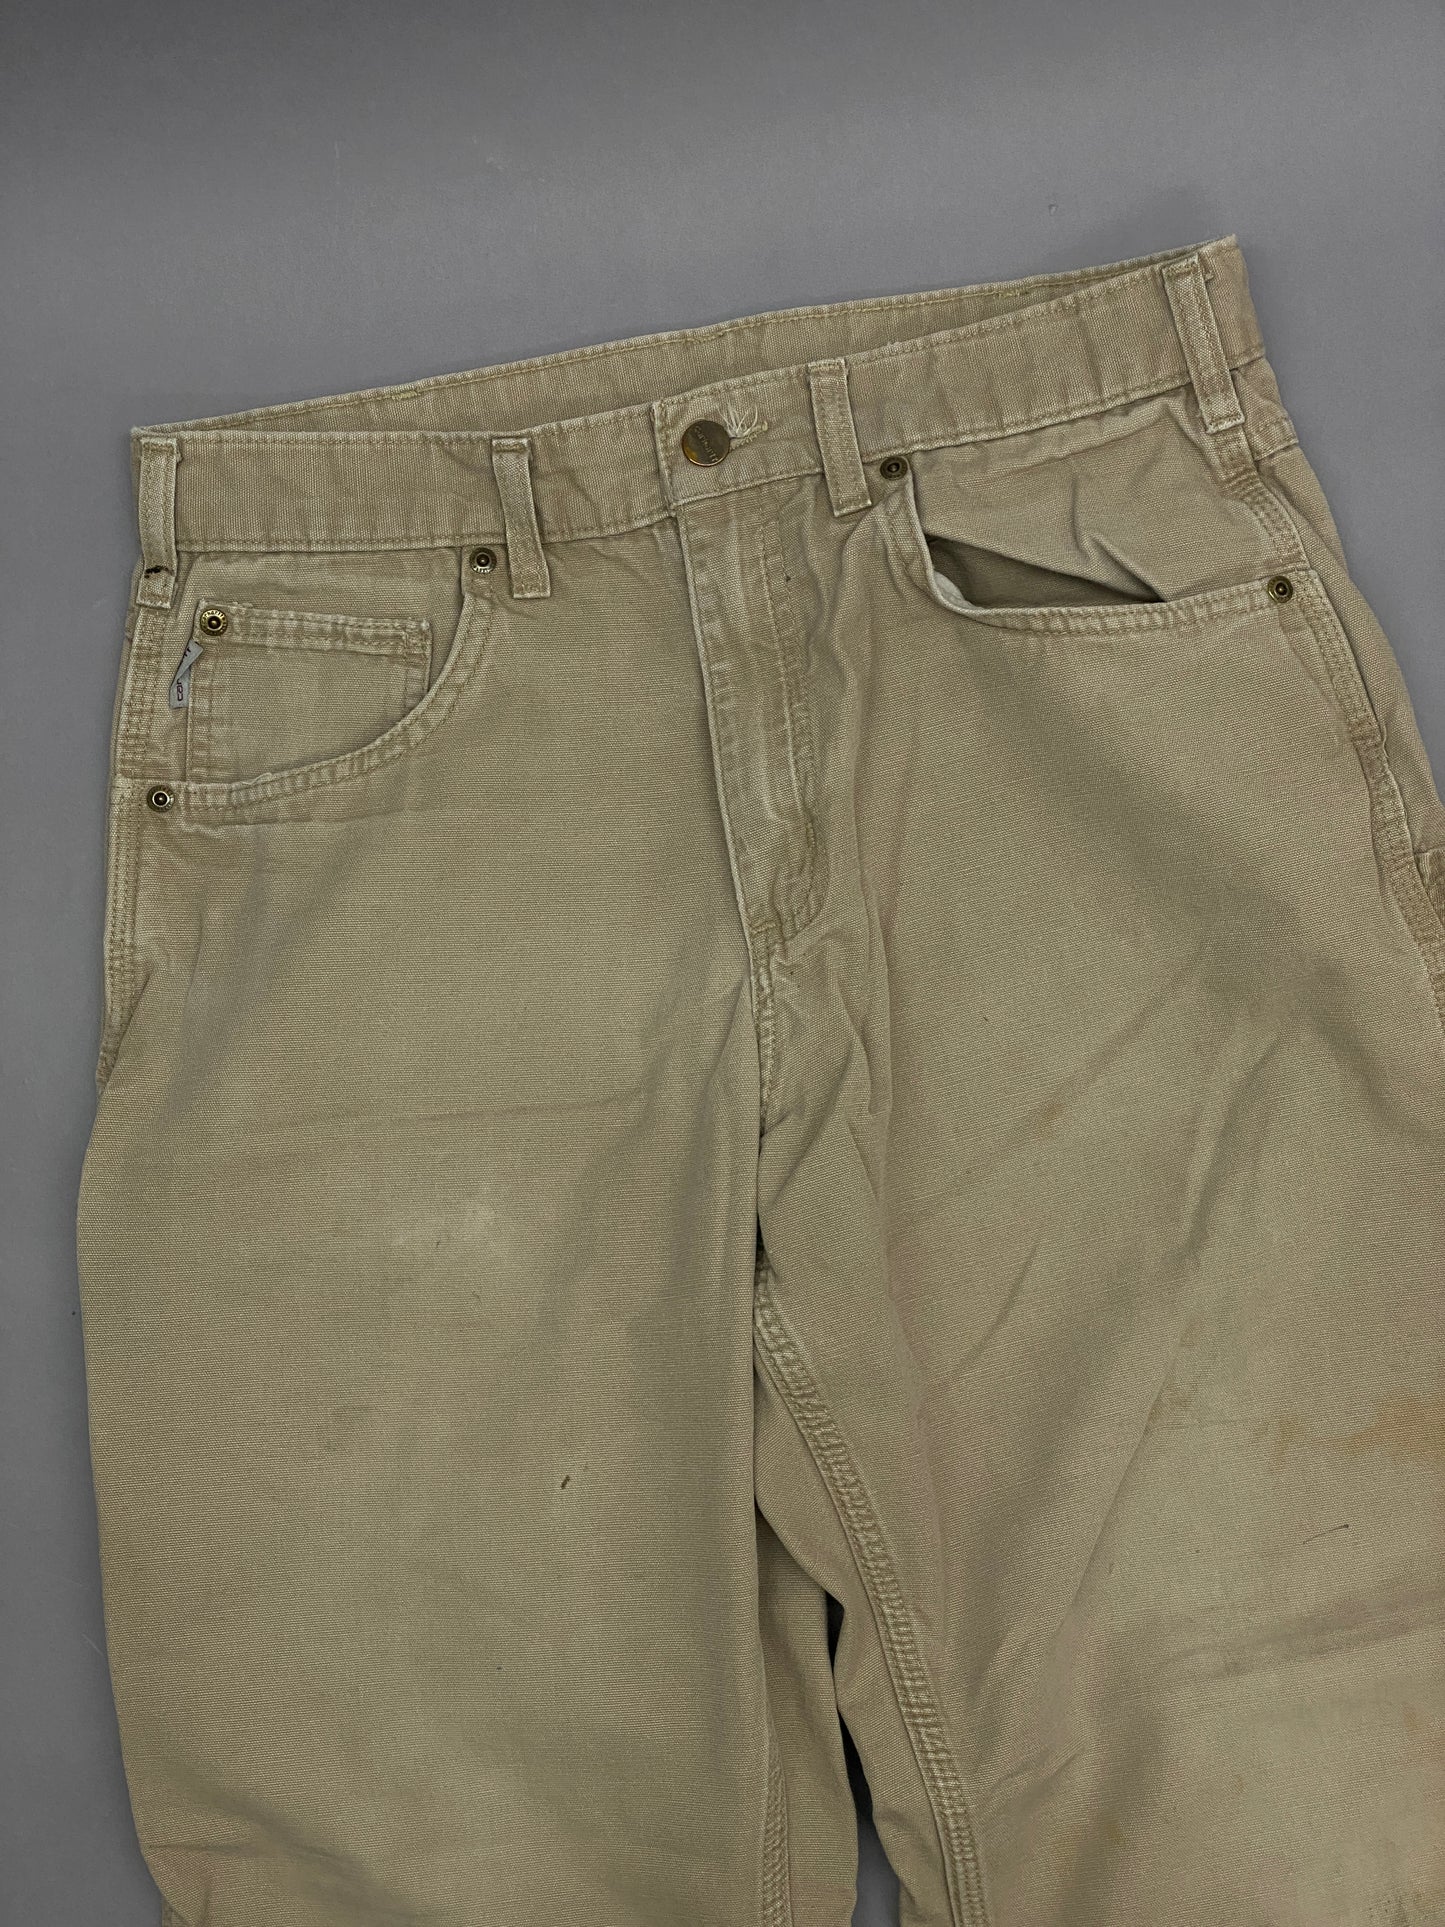 Carhartt Carpenter Vintage Pants - 32 x 30